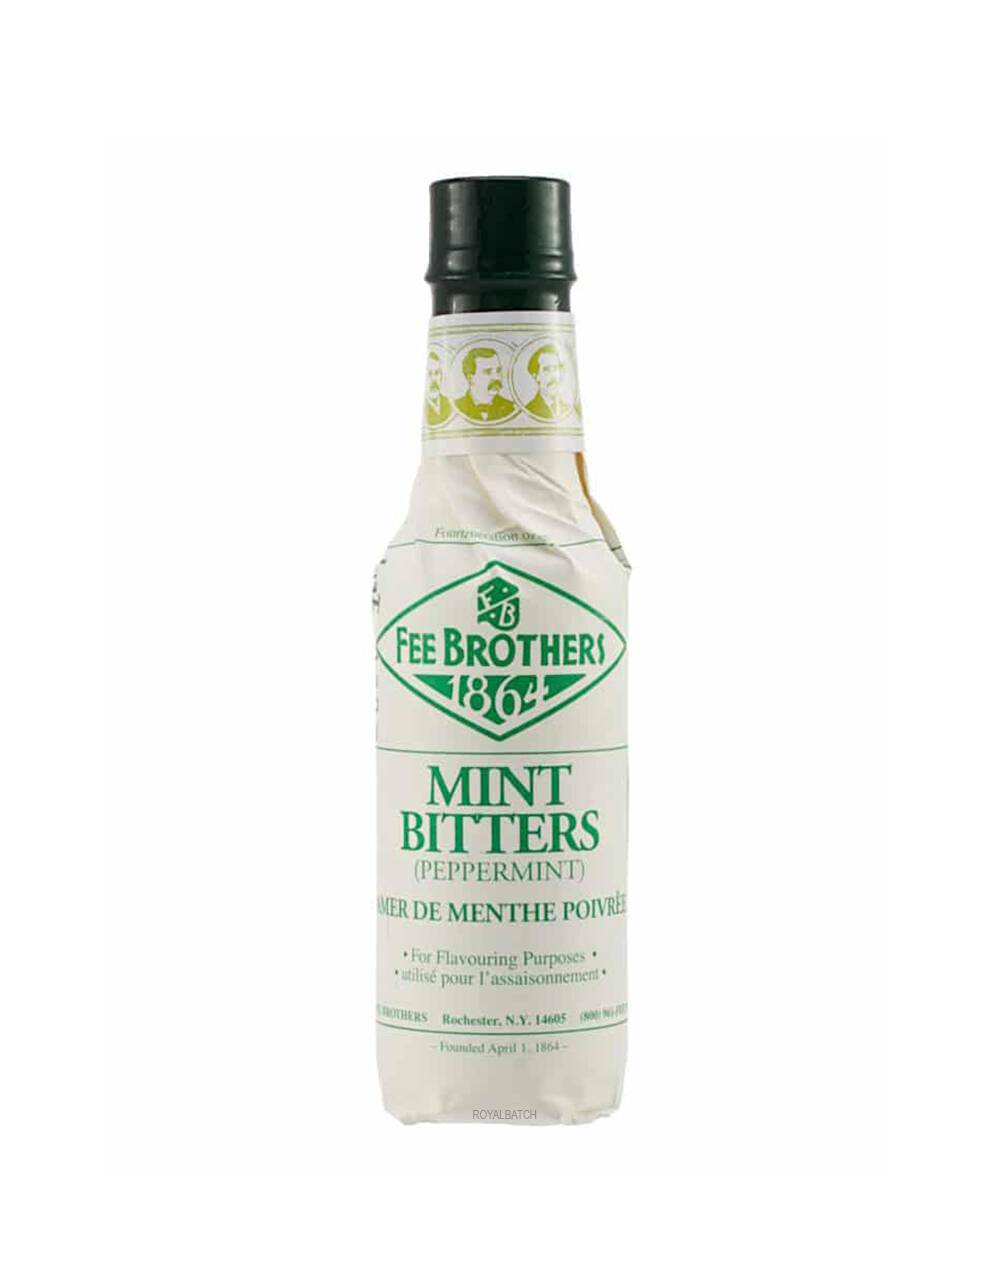 Fee Brothers Mint Bitters 150ml